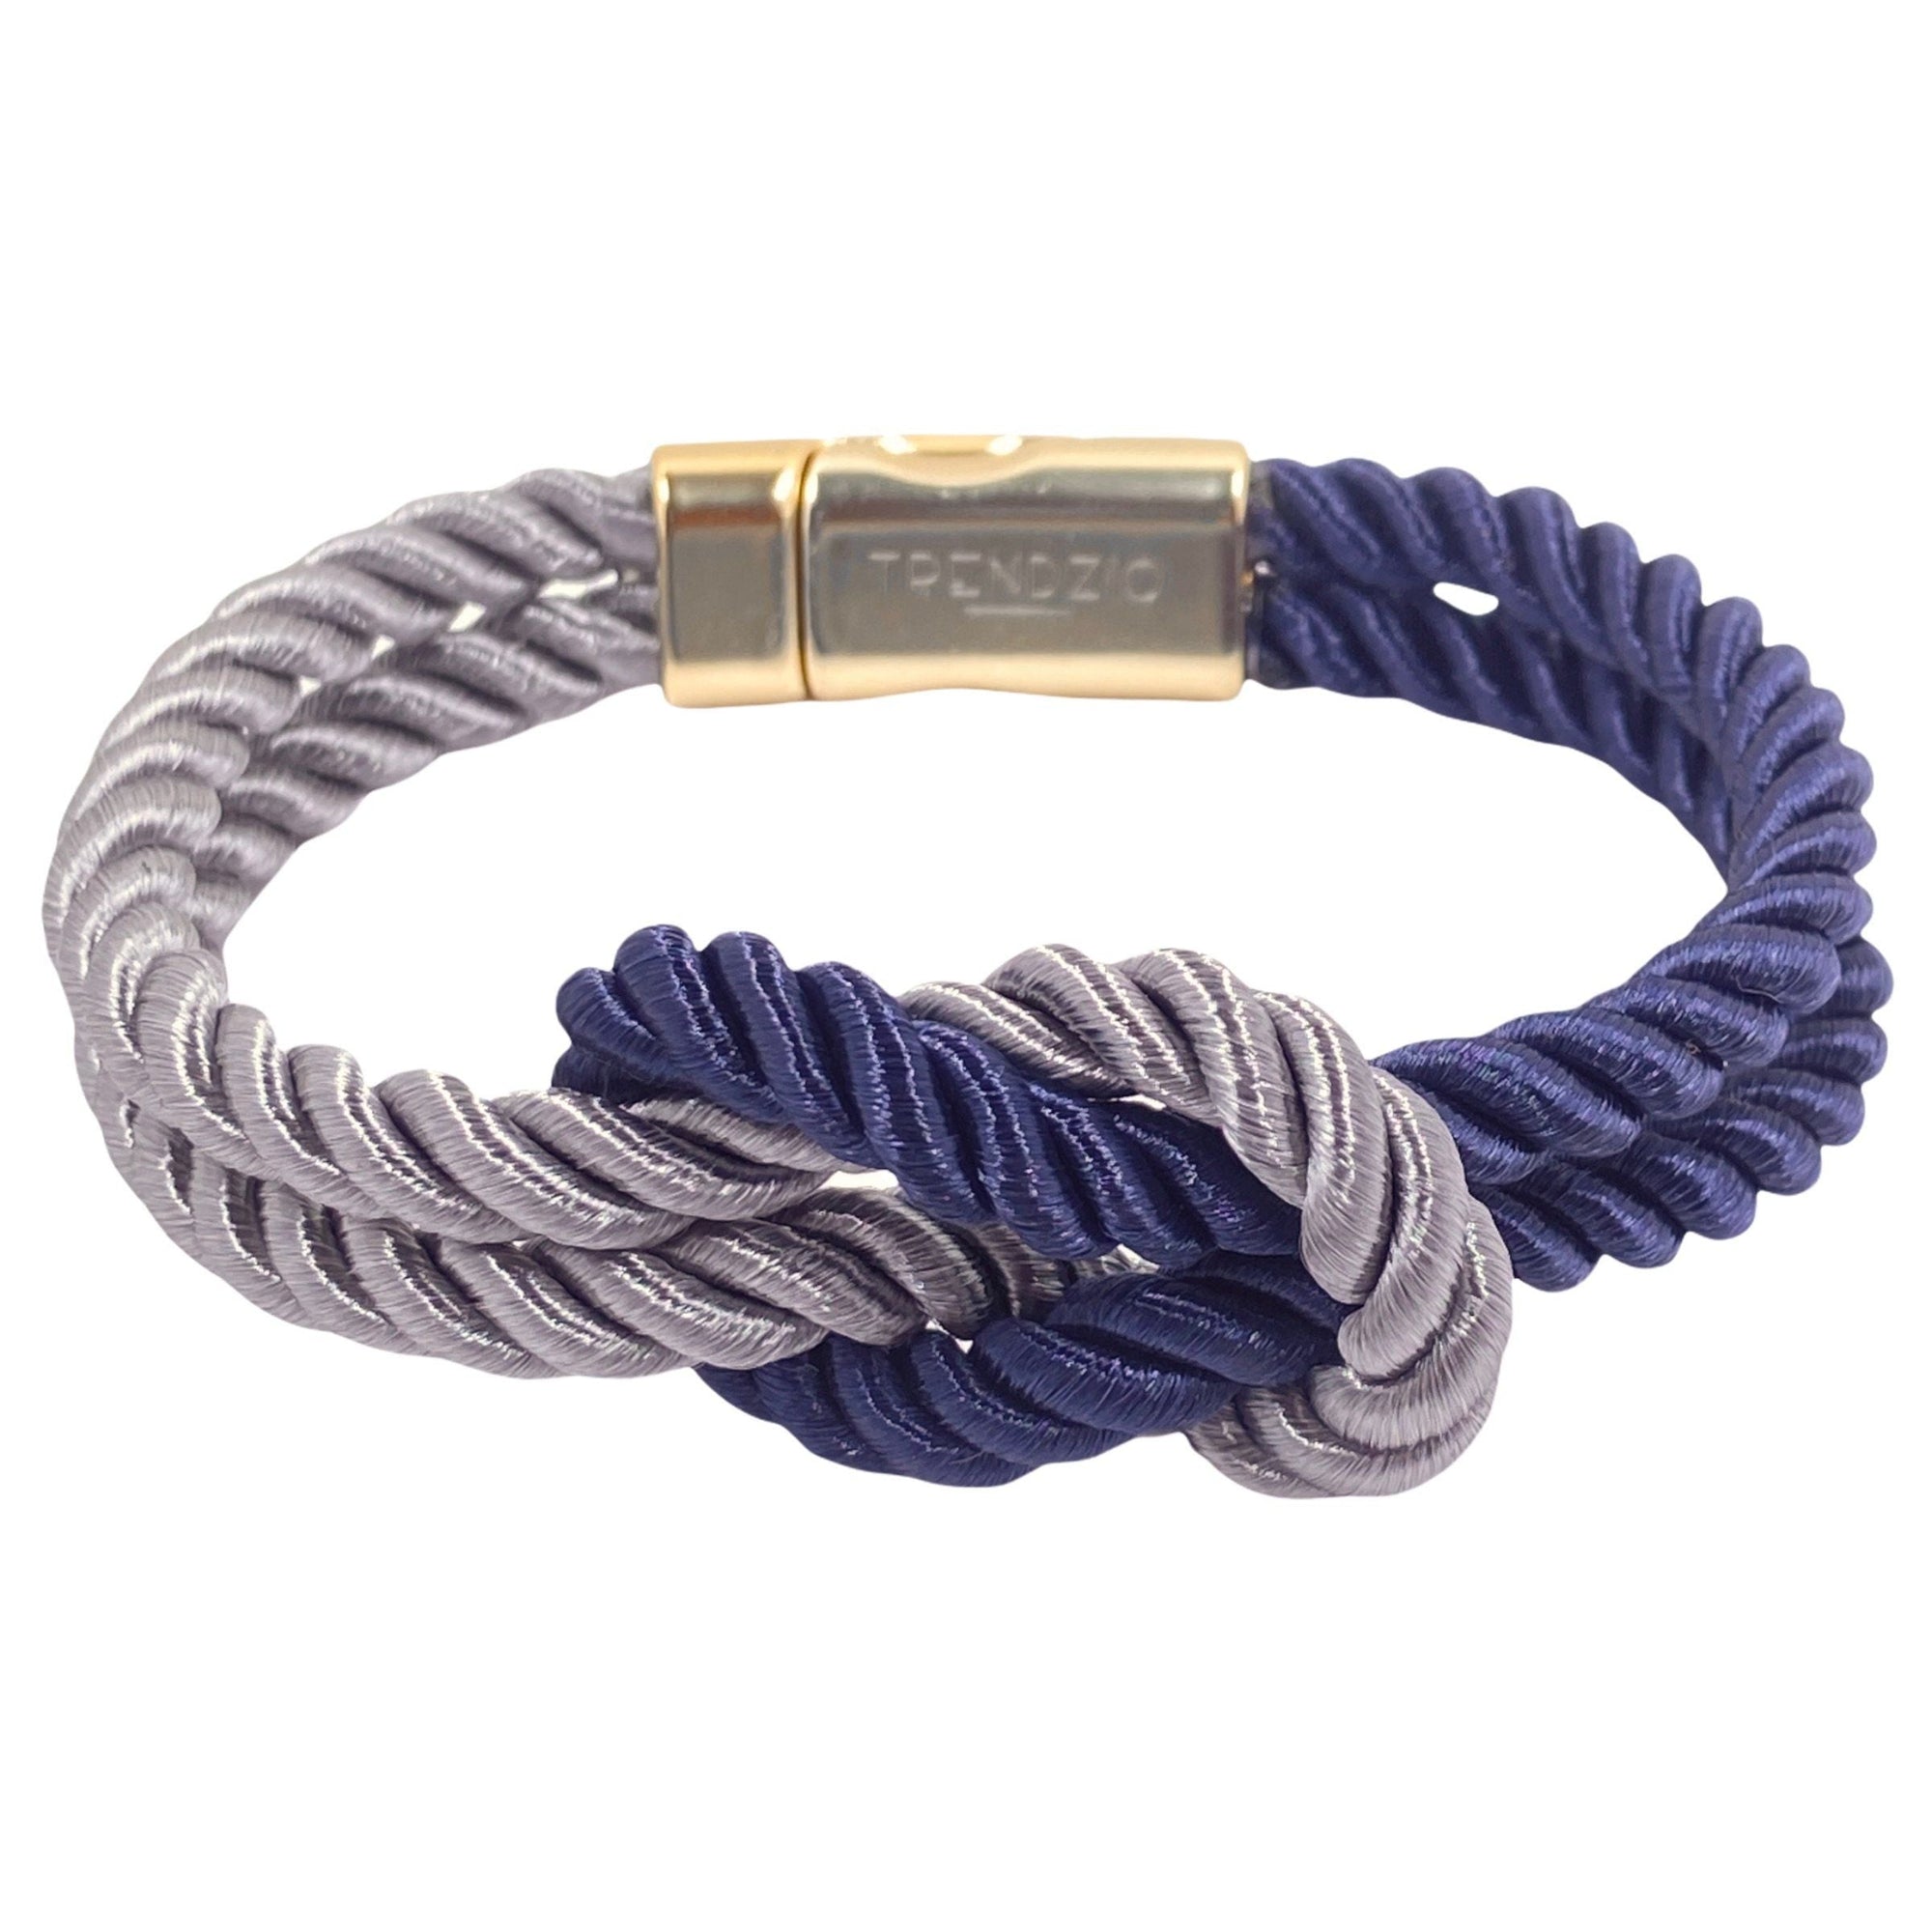 The Original Love Knot Satin Rope Bracelet- Grey and Navy Blue Bracelets Trendzio Grey and Navy Blue 